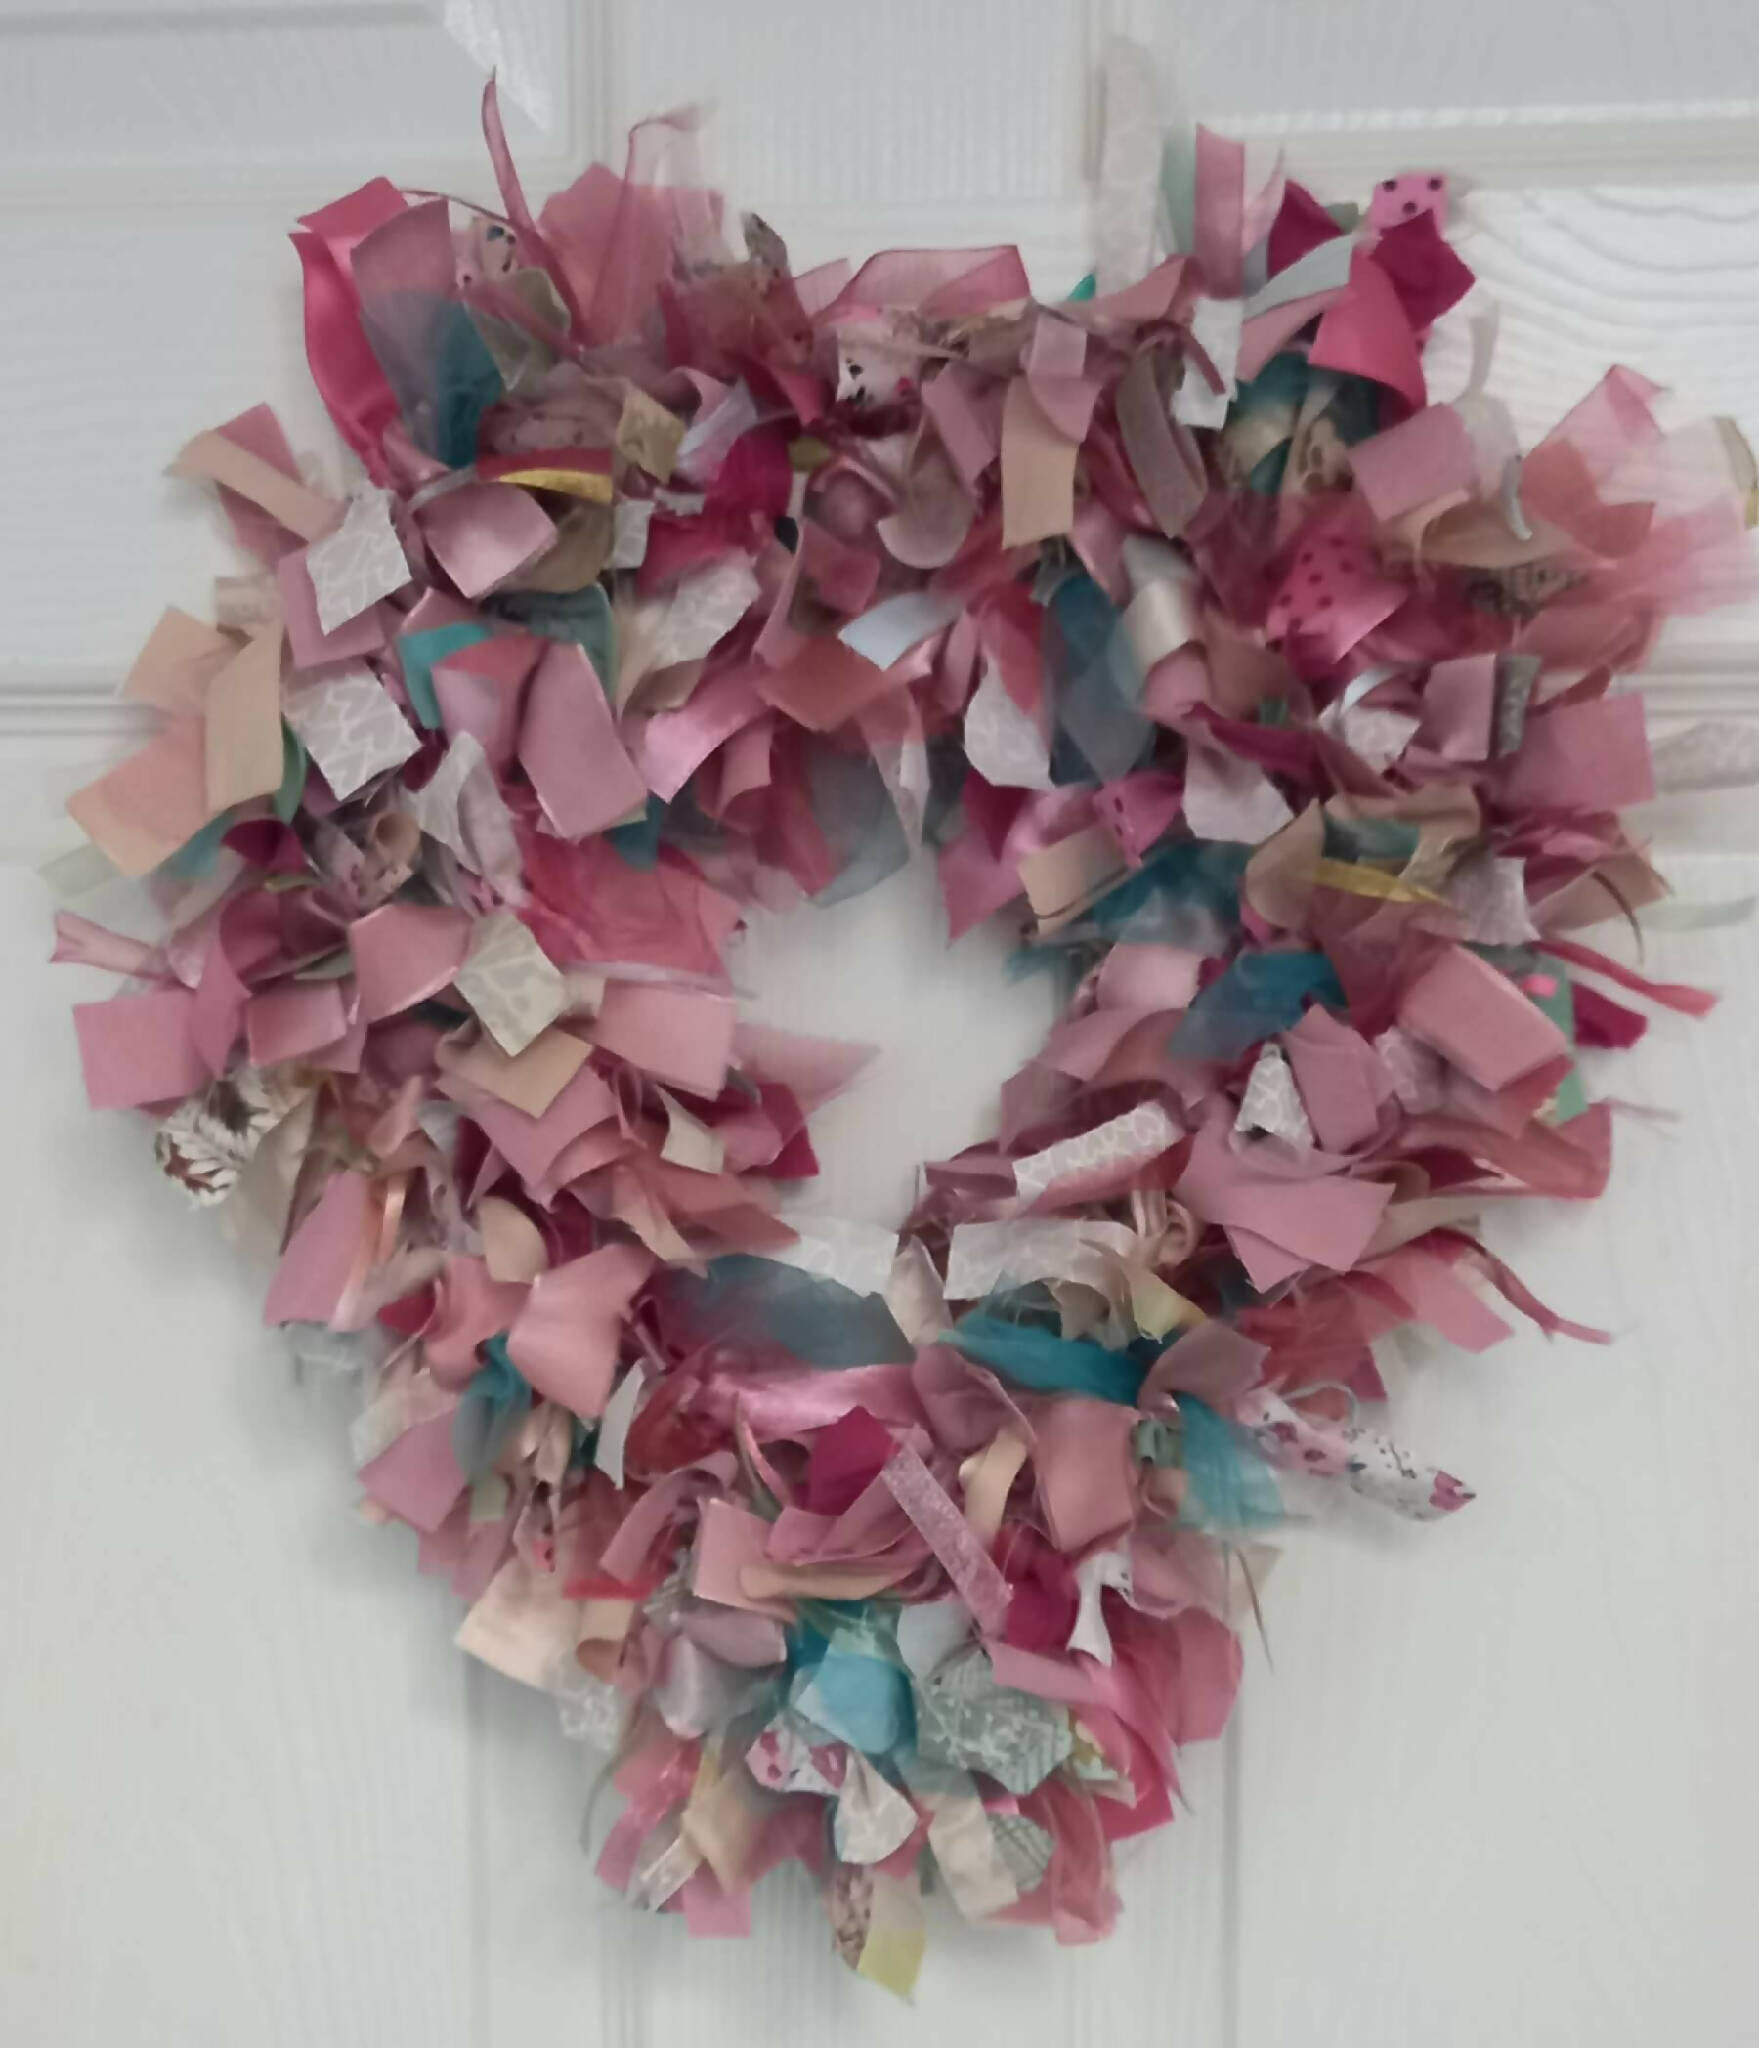 Romantic Pink Heart Shaped Rag Wreath